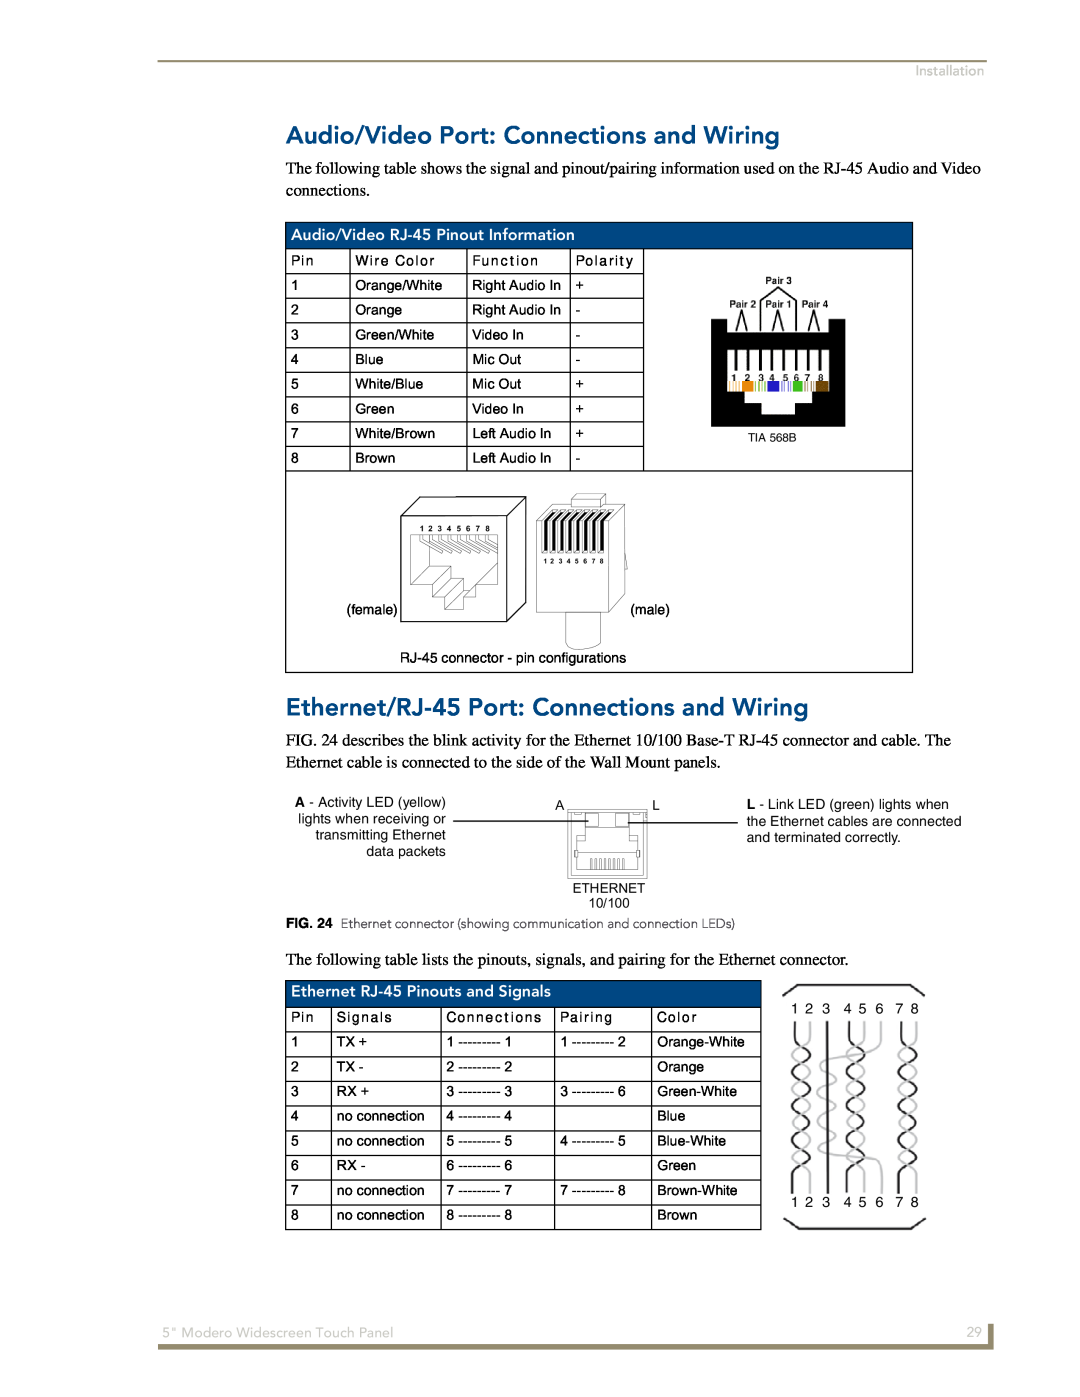 AMX NXD-CV5 manual Audio/Video Port Connections and Wiring, Ethernet/RJ-45 Port Connections and Wiring 